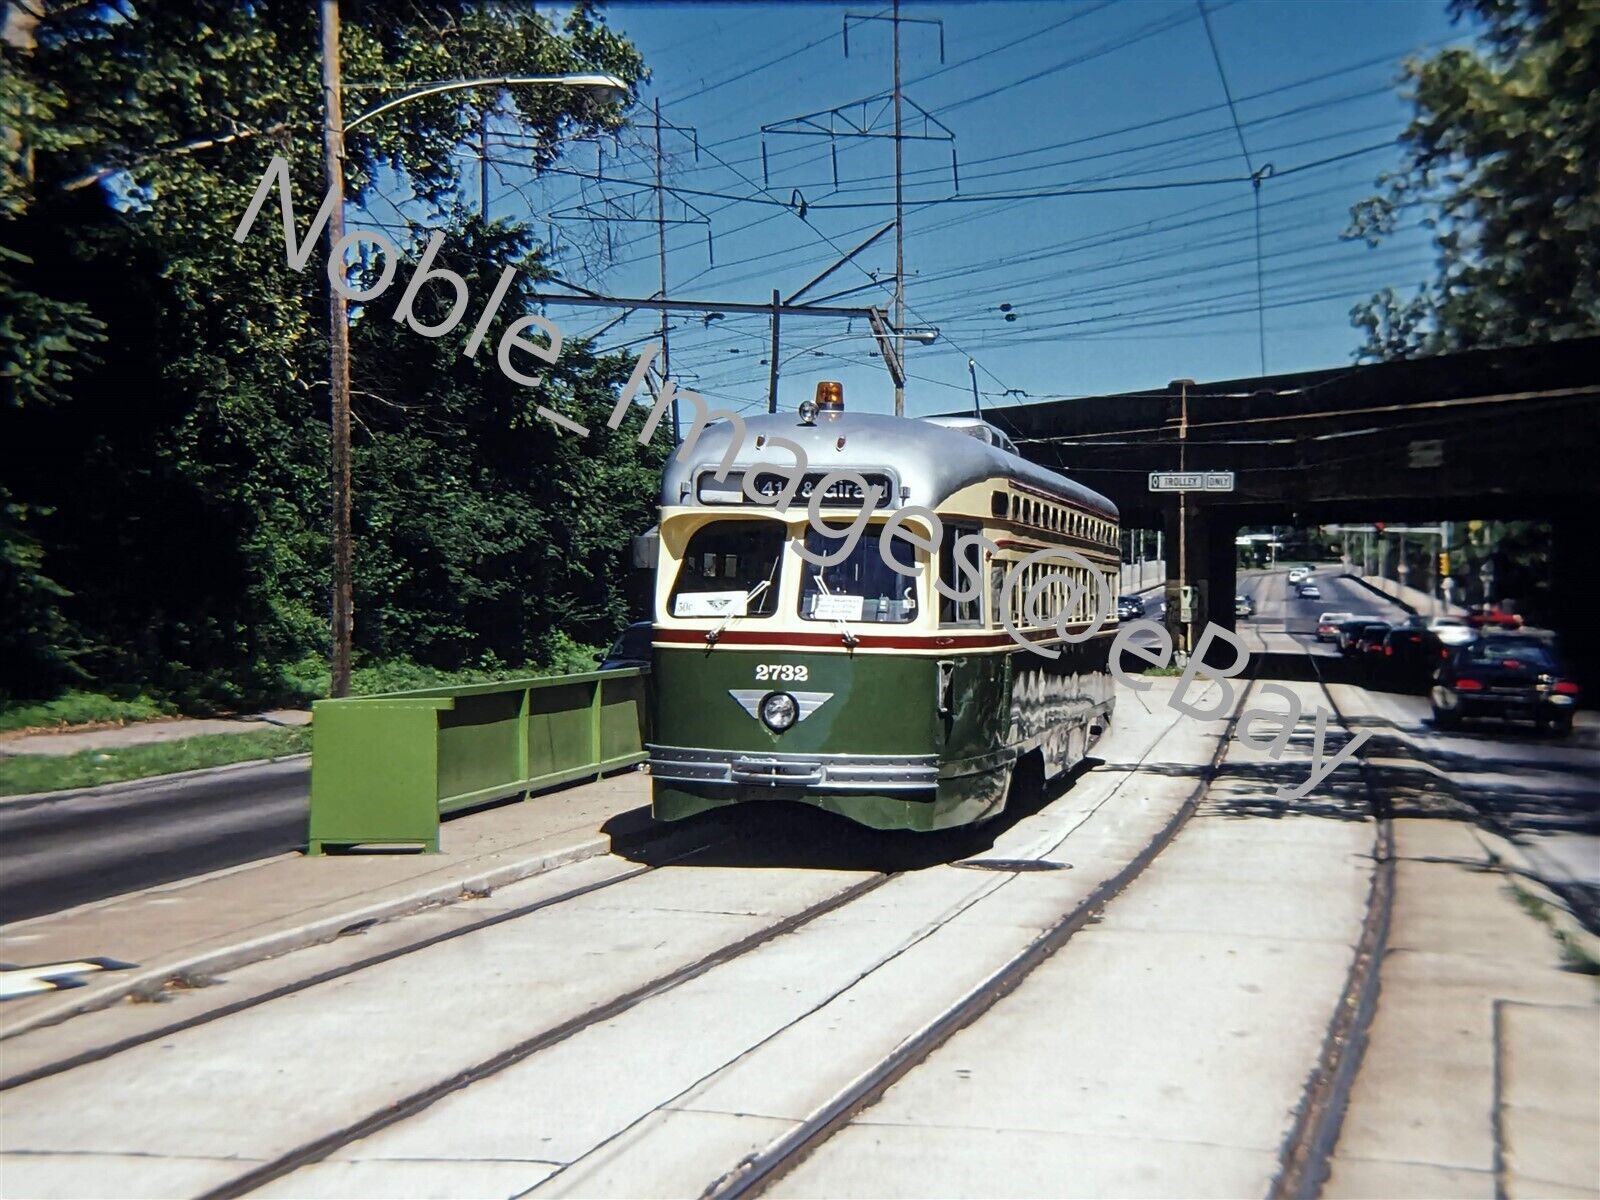 1995 SEPTA PCC 2732 Trolley Philadelphia 41st & Girard Kodachrome 35mm Slide